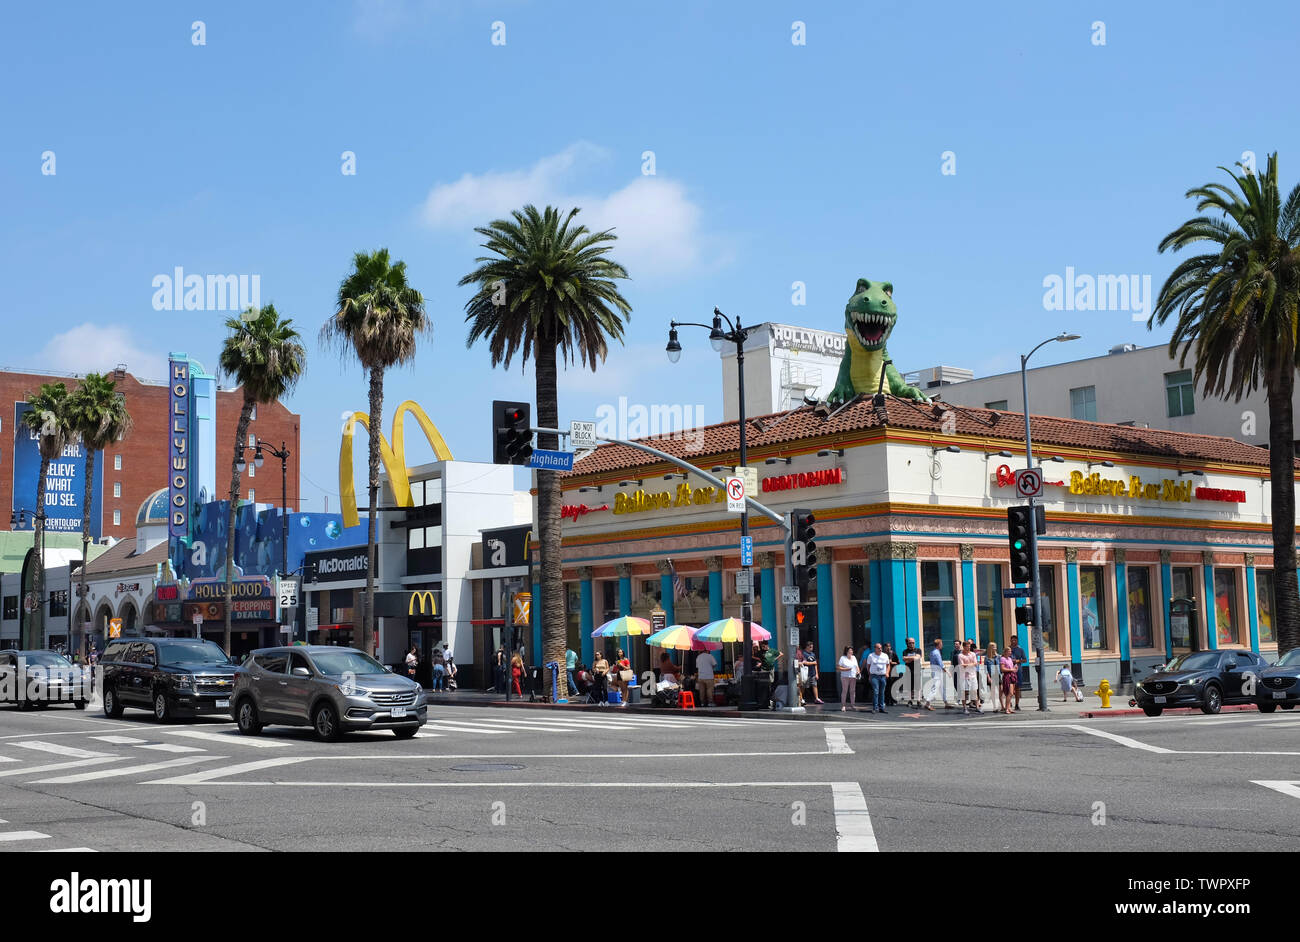 - HOLLYWOOD CALIFORNIE : Juin 18, 2019 : Ripleys Believe it or Not sur Hollywood Boulevard et Highland Avenue. Banque D'Images